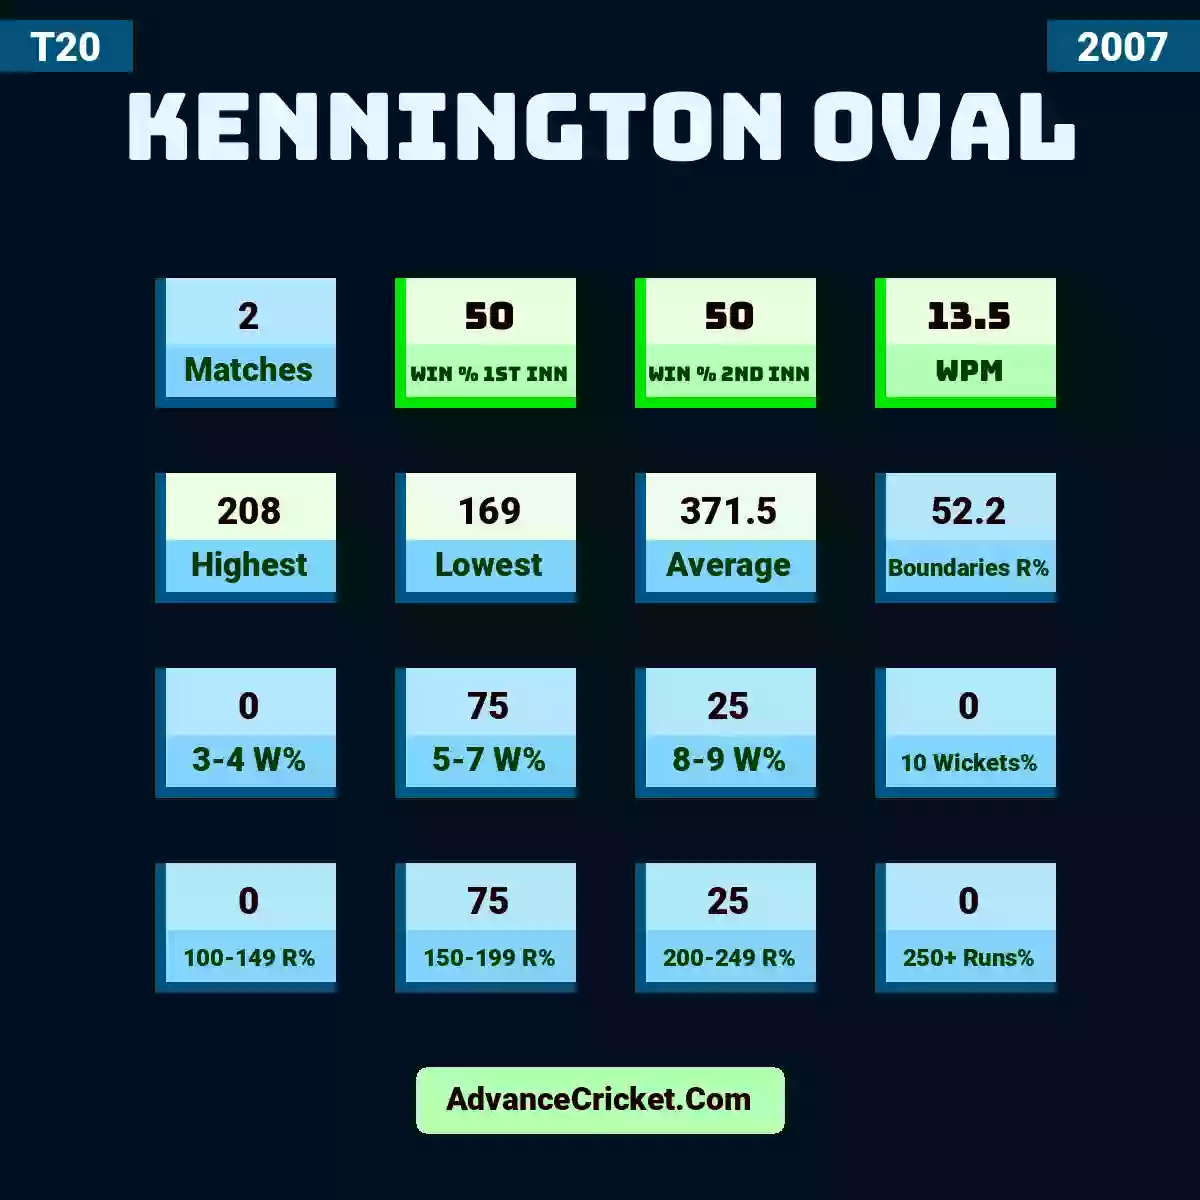 Image showing Kennington Oval with Matches: 2, Win % 1st Inn: 50, Win % 2nd Inn: 50, WPM: 13.5, Highest: 208, Lowest: 169, Average: 371.5, Boundaries R%: 52.2, 3-4 W%: 0, 5-7 W%: 75, 8-9 W%: 25, 10 Wickets%: 0, 100-149 R%: 0, 150-199 R%: 75, 200-249 R%: 25, 250+ Runs%: 0.